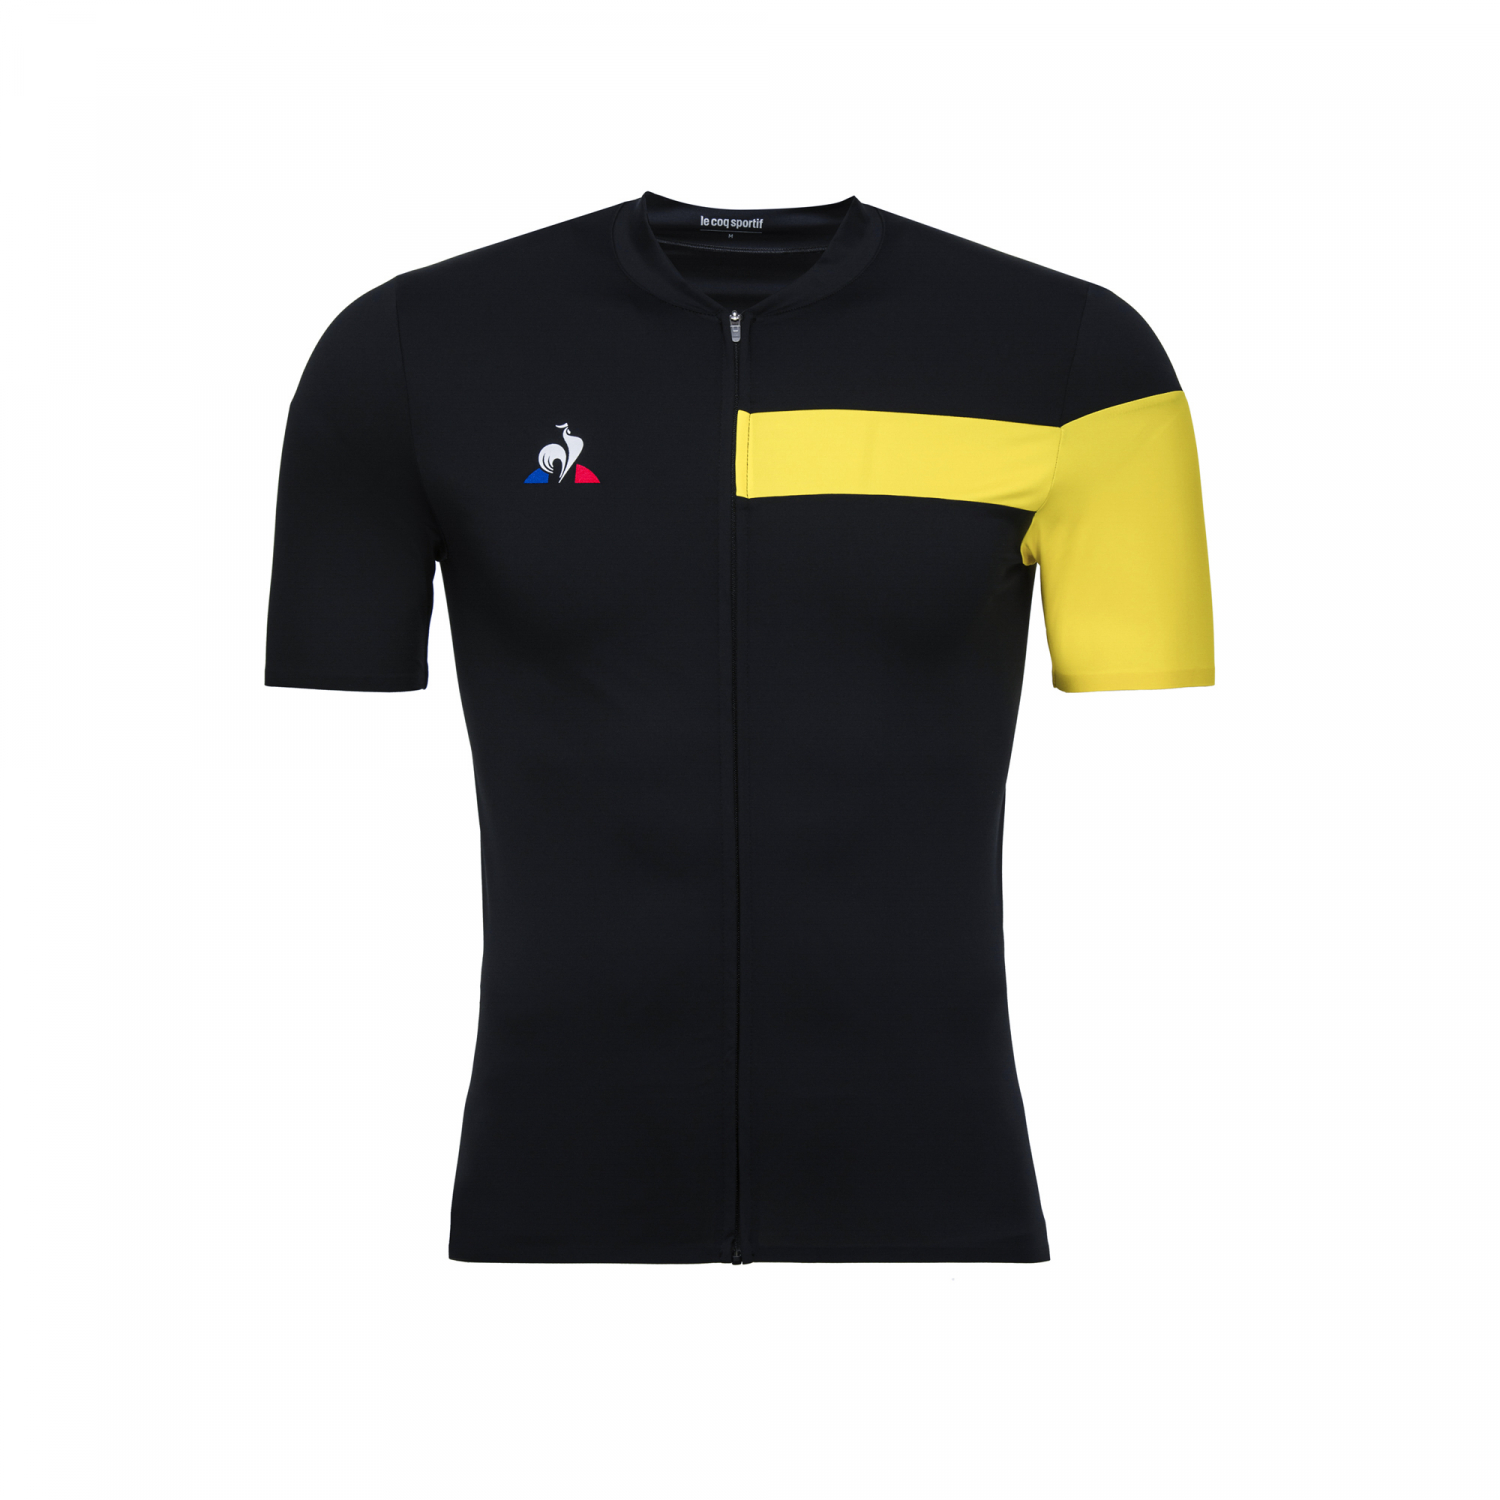 Tour de France Performance Black Man Cycling Jersey | Official product